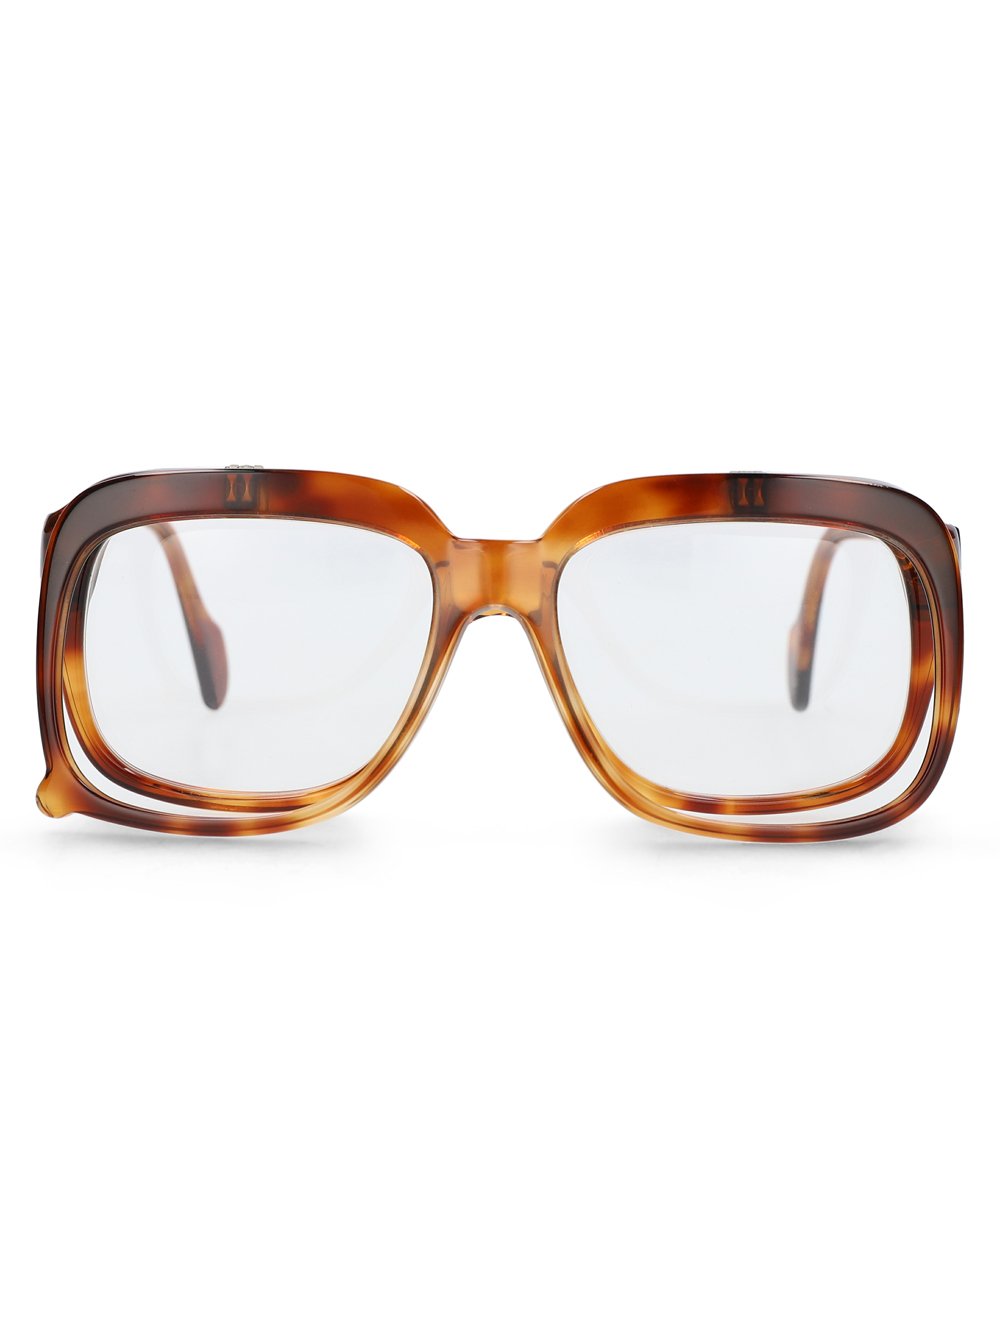 NEOSTYLE Unisex Acetate Glasses & Frames 